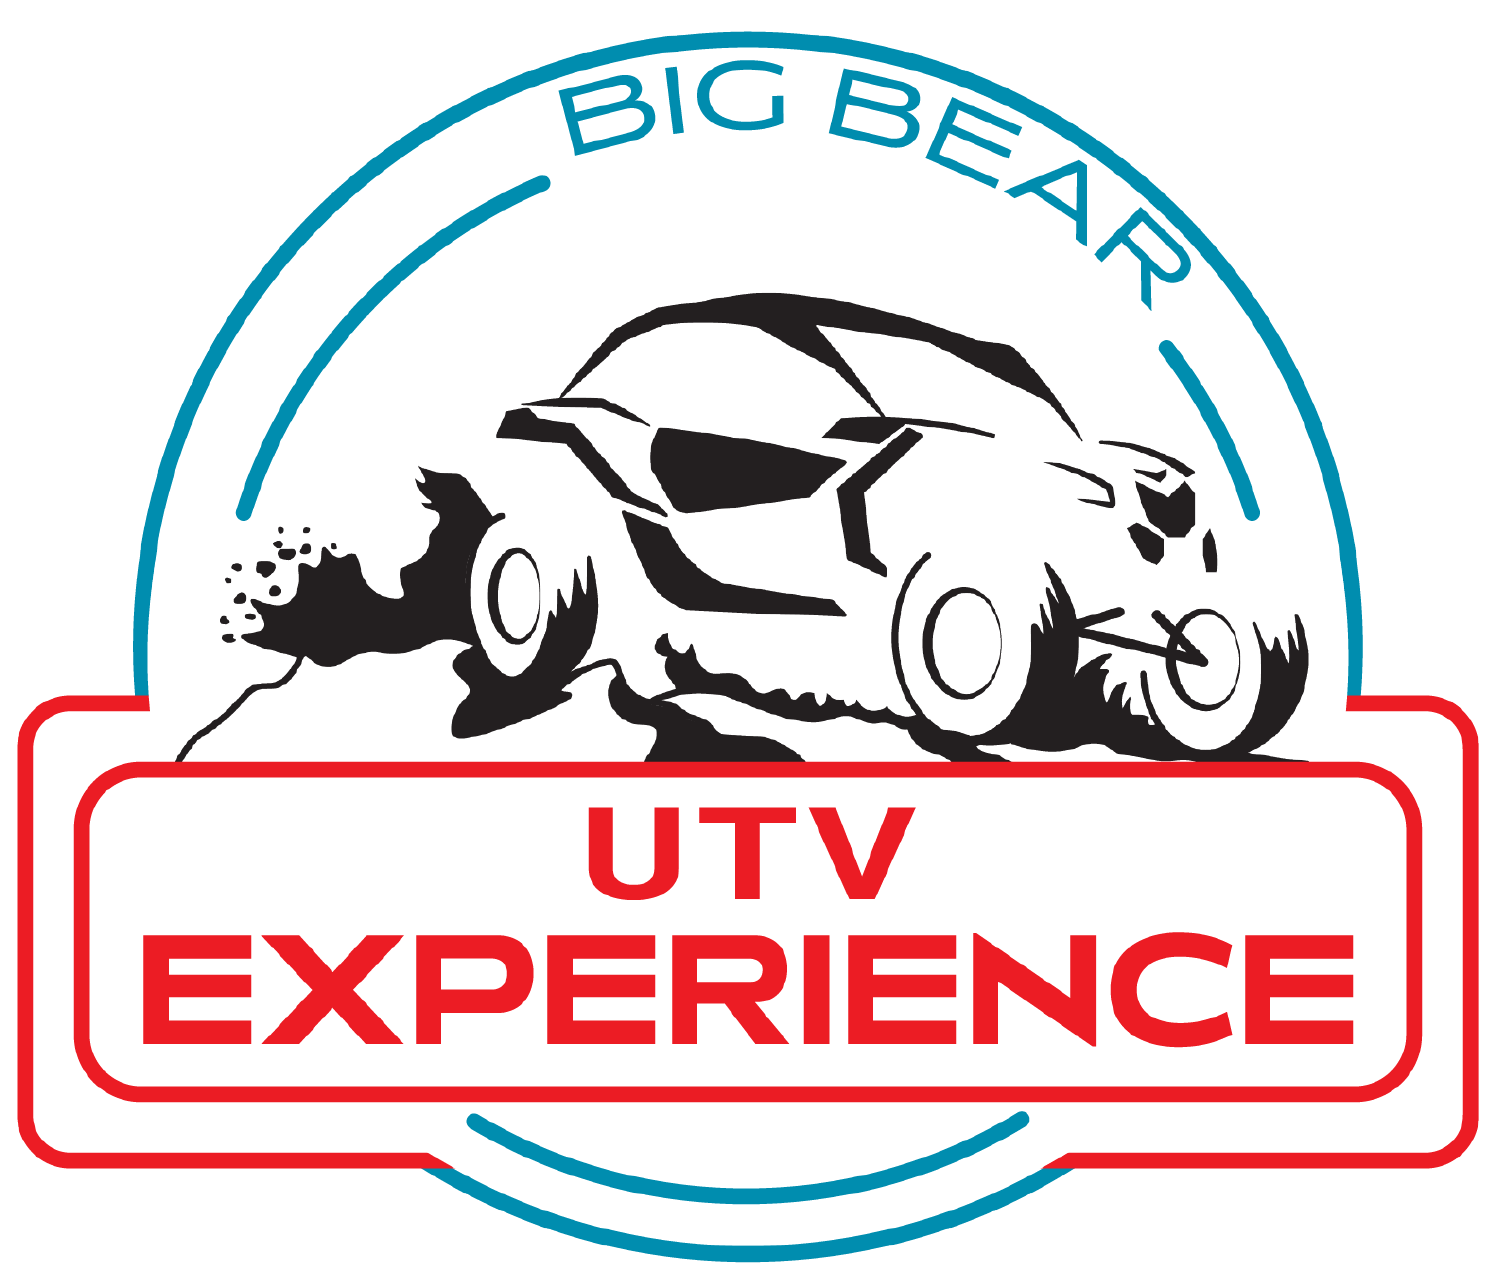 UTV Experience logo image